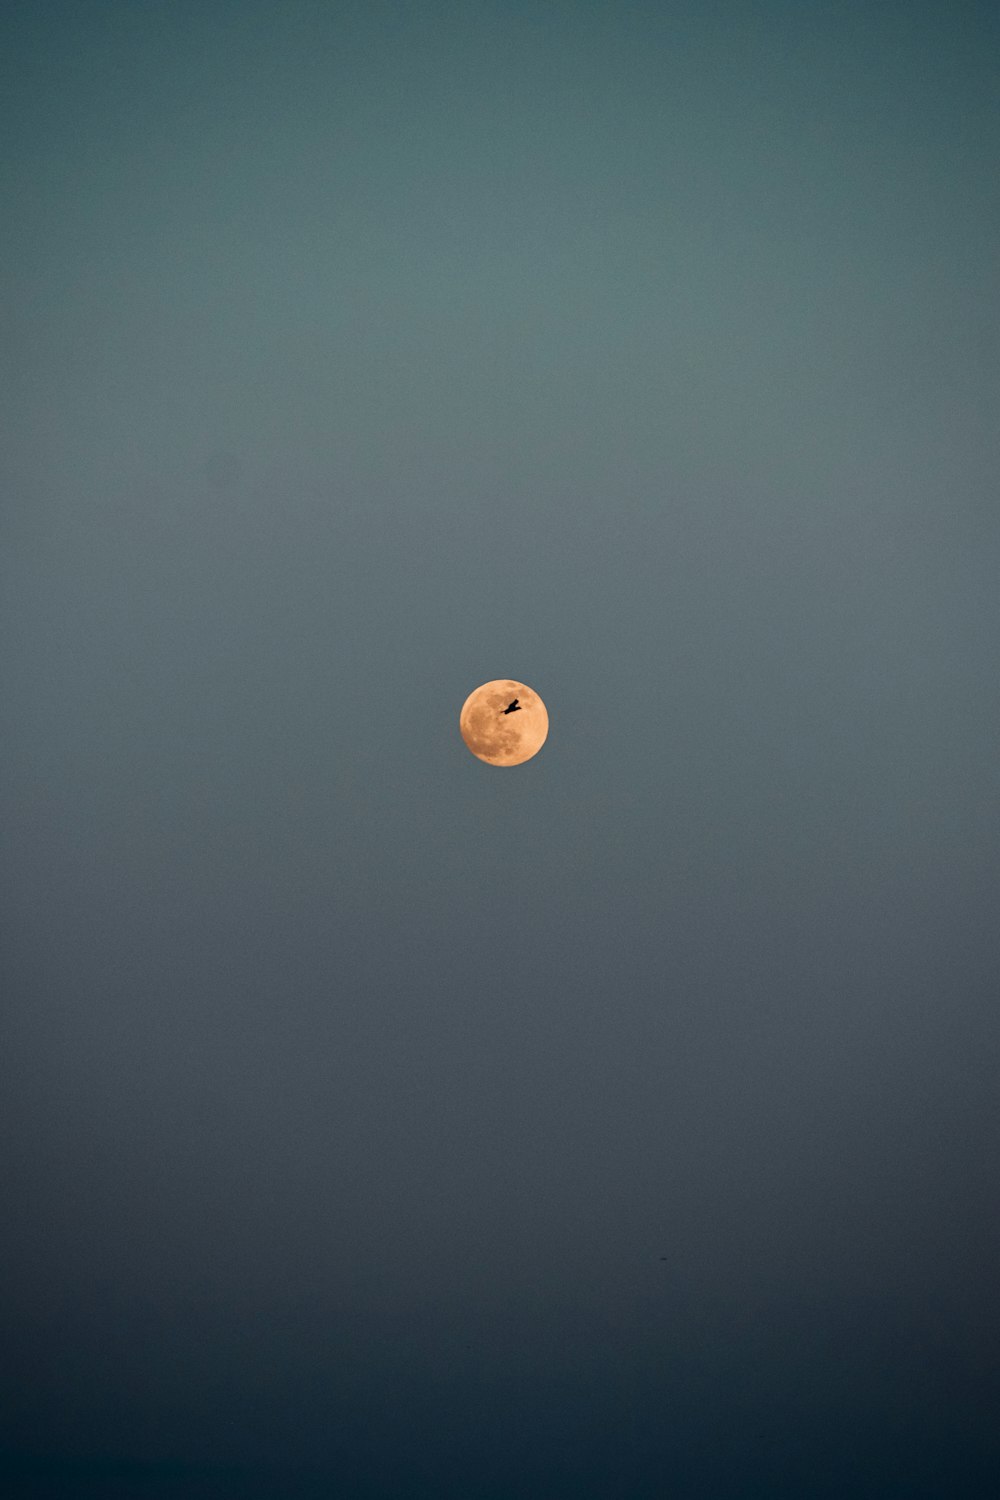 a full moon is seen in the sky